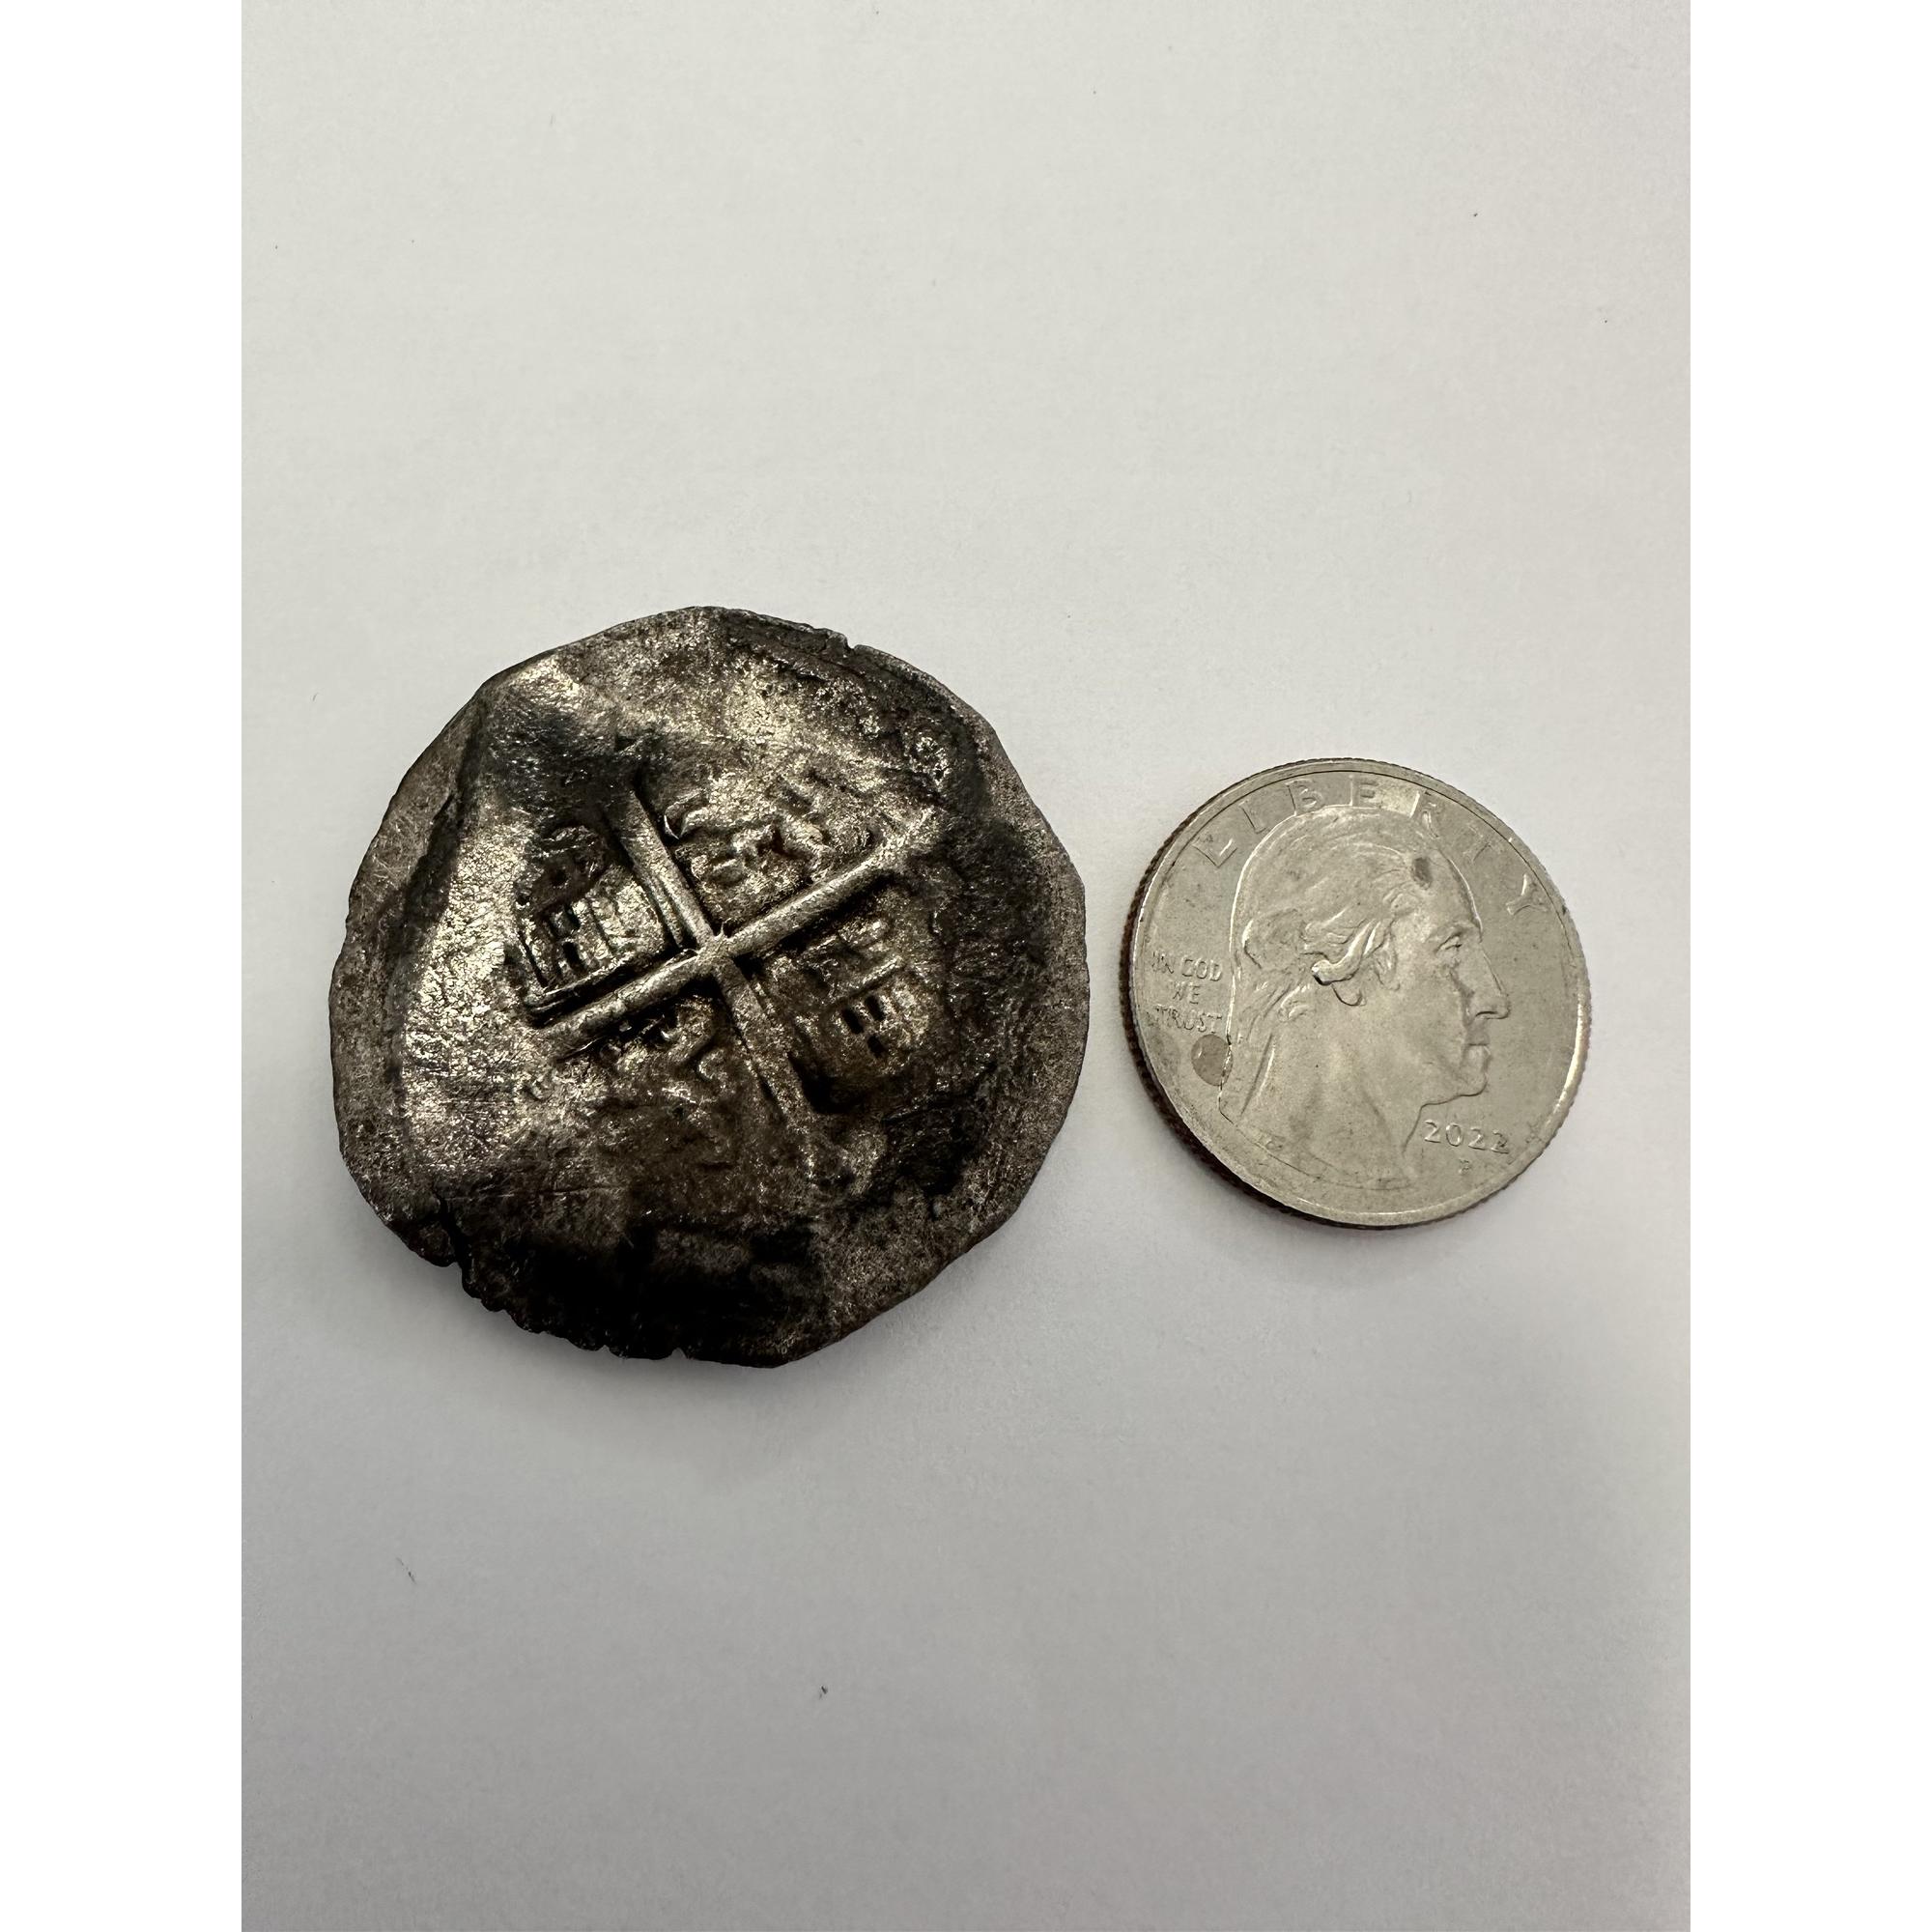 Concepcion shipwreck coin, 8 reale compared with a quarter